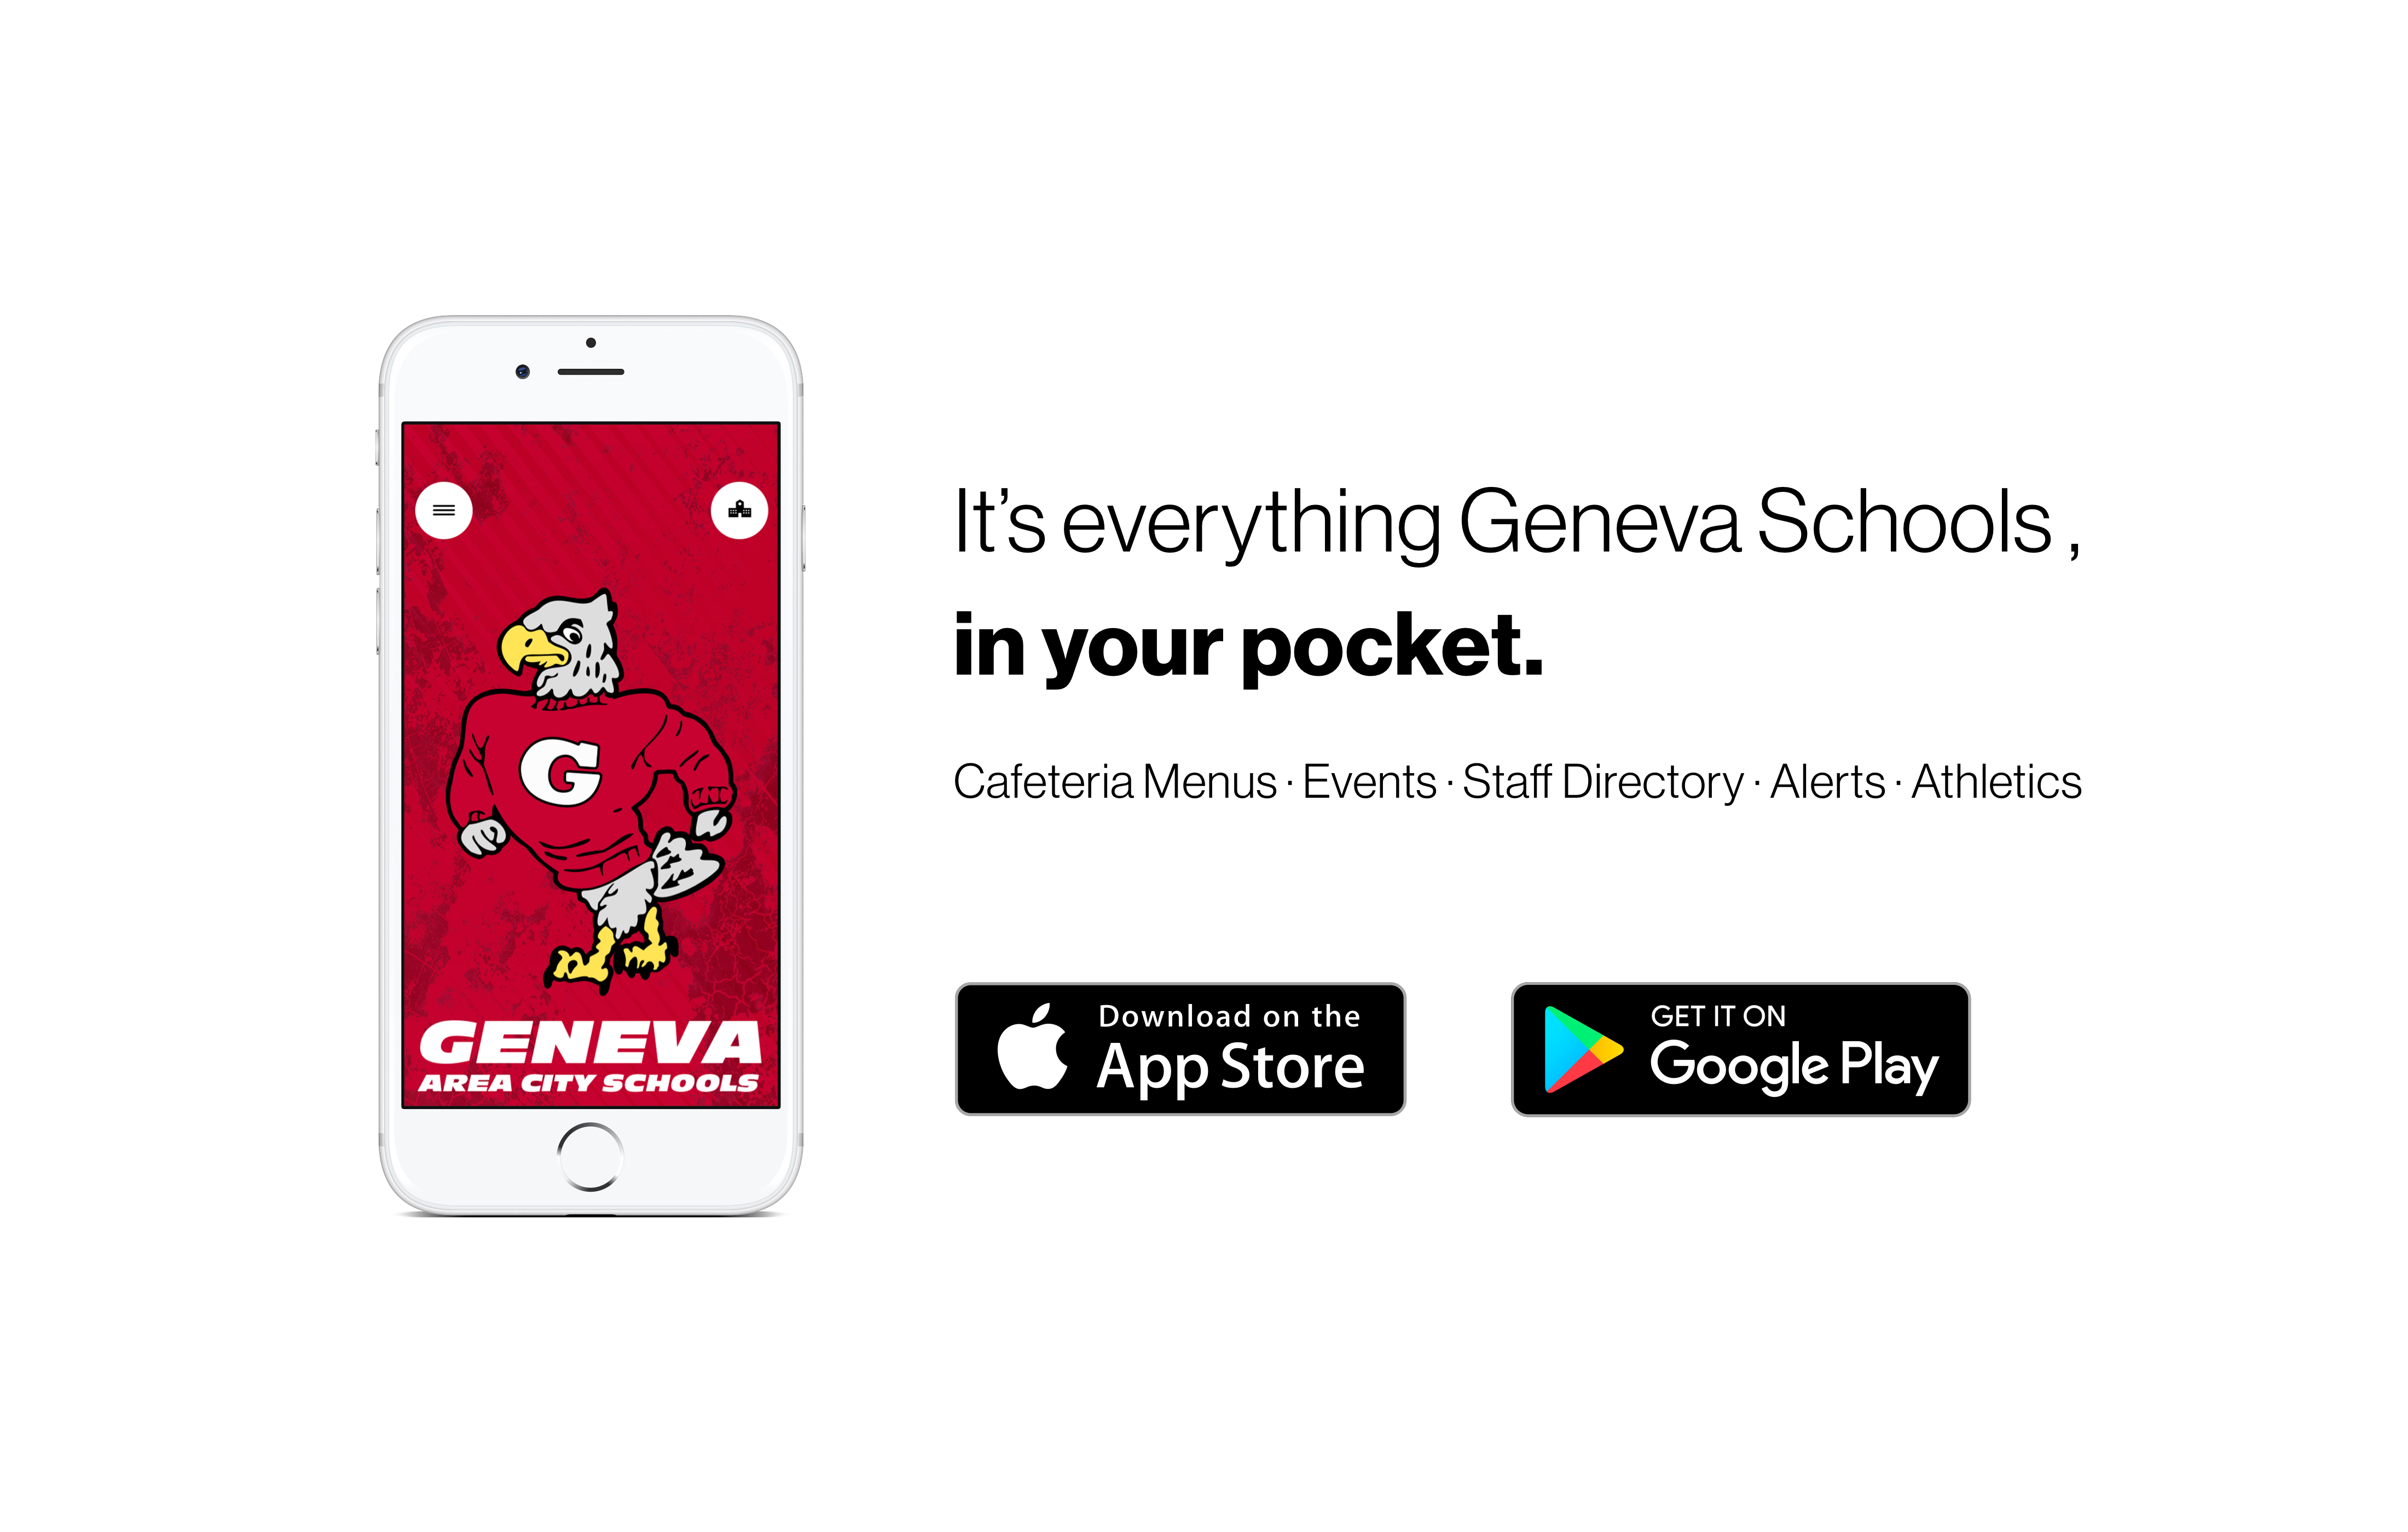 It's everything Geneva Schools, in your pocket